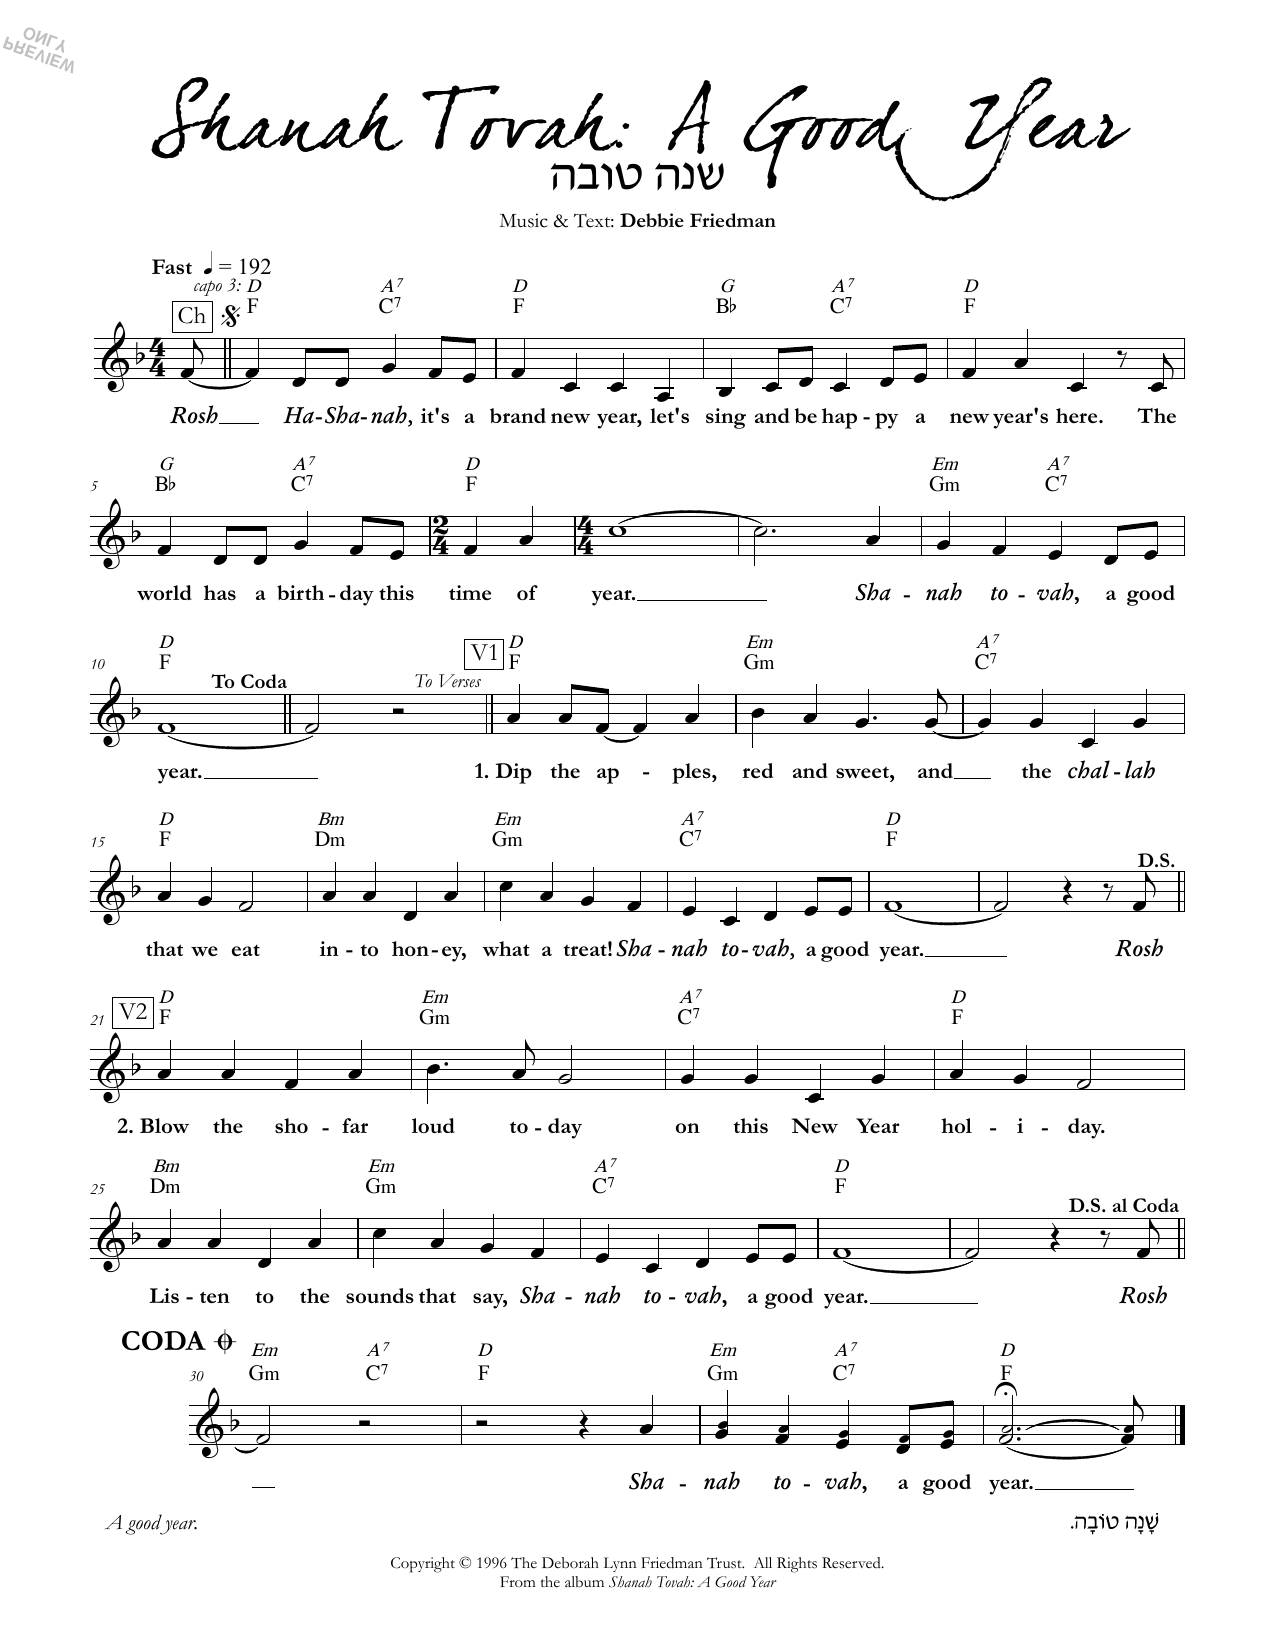 Debbie Friedman Shanah Tovah: A Good Year Sheet Music Notes & Chords for Lead Sheet / Fake Book - Download or Print PDF